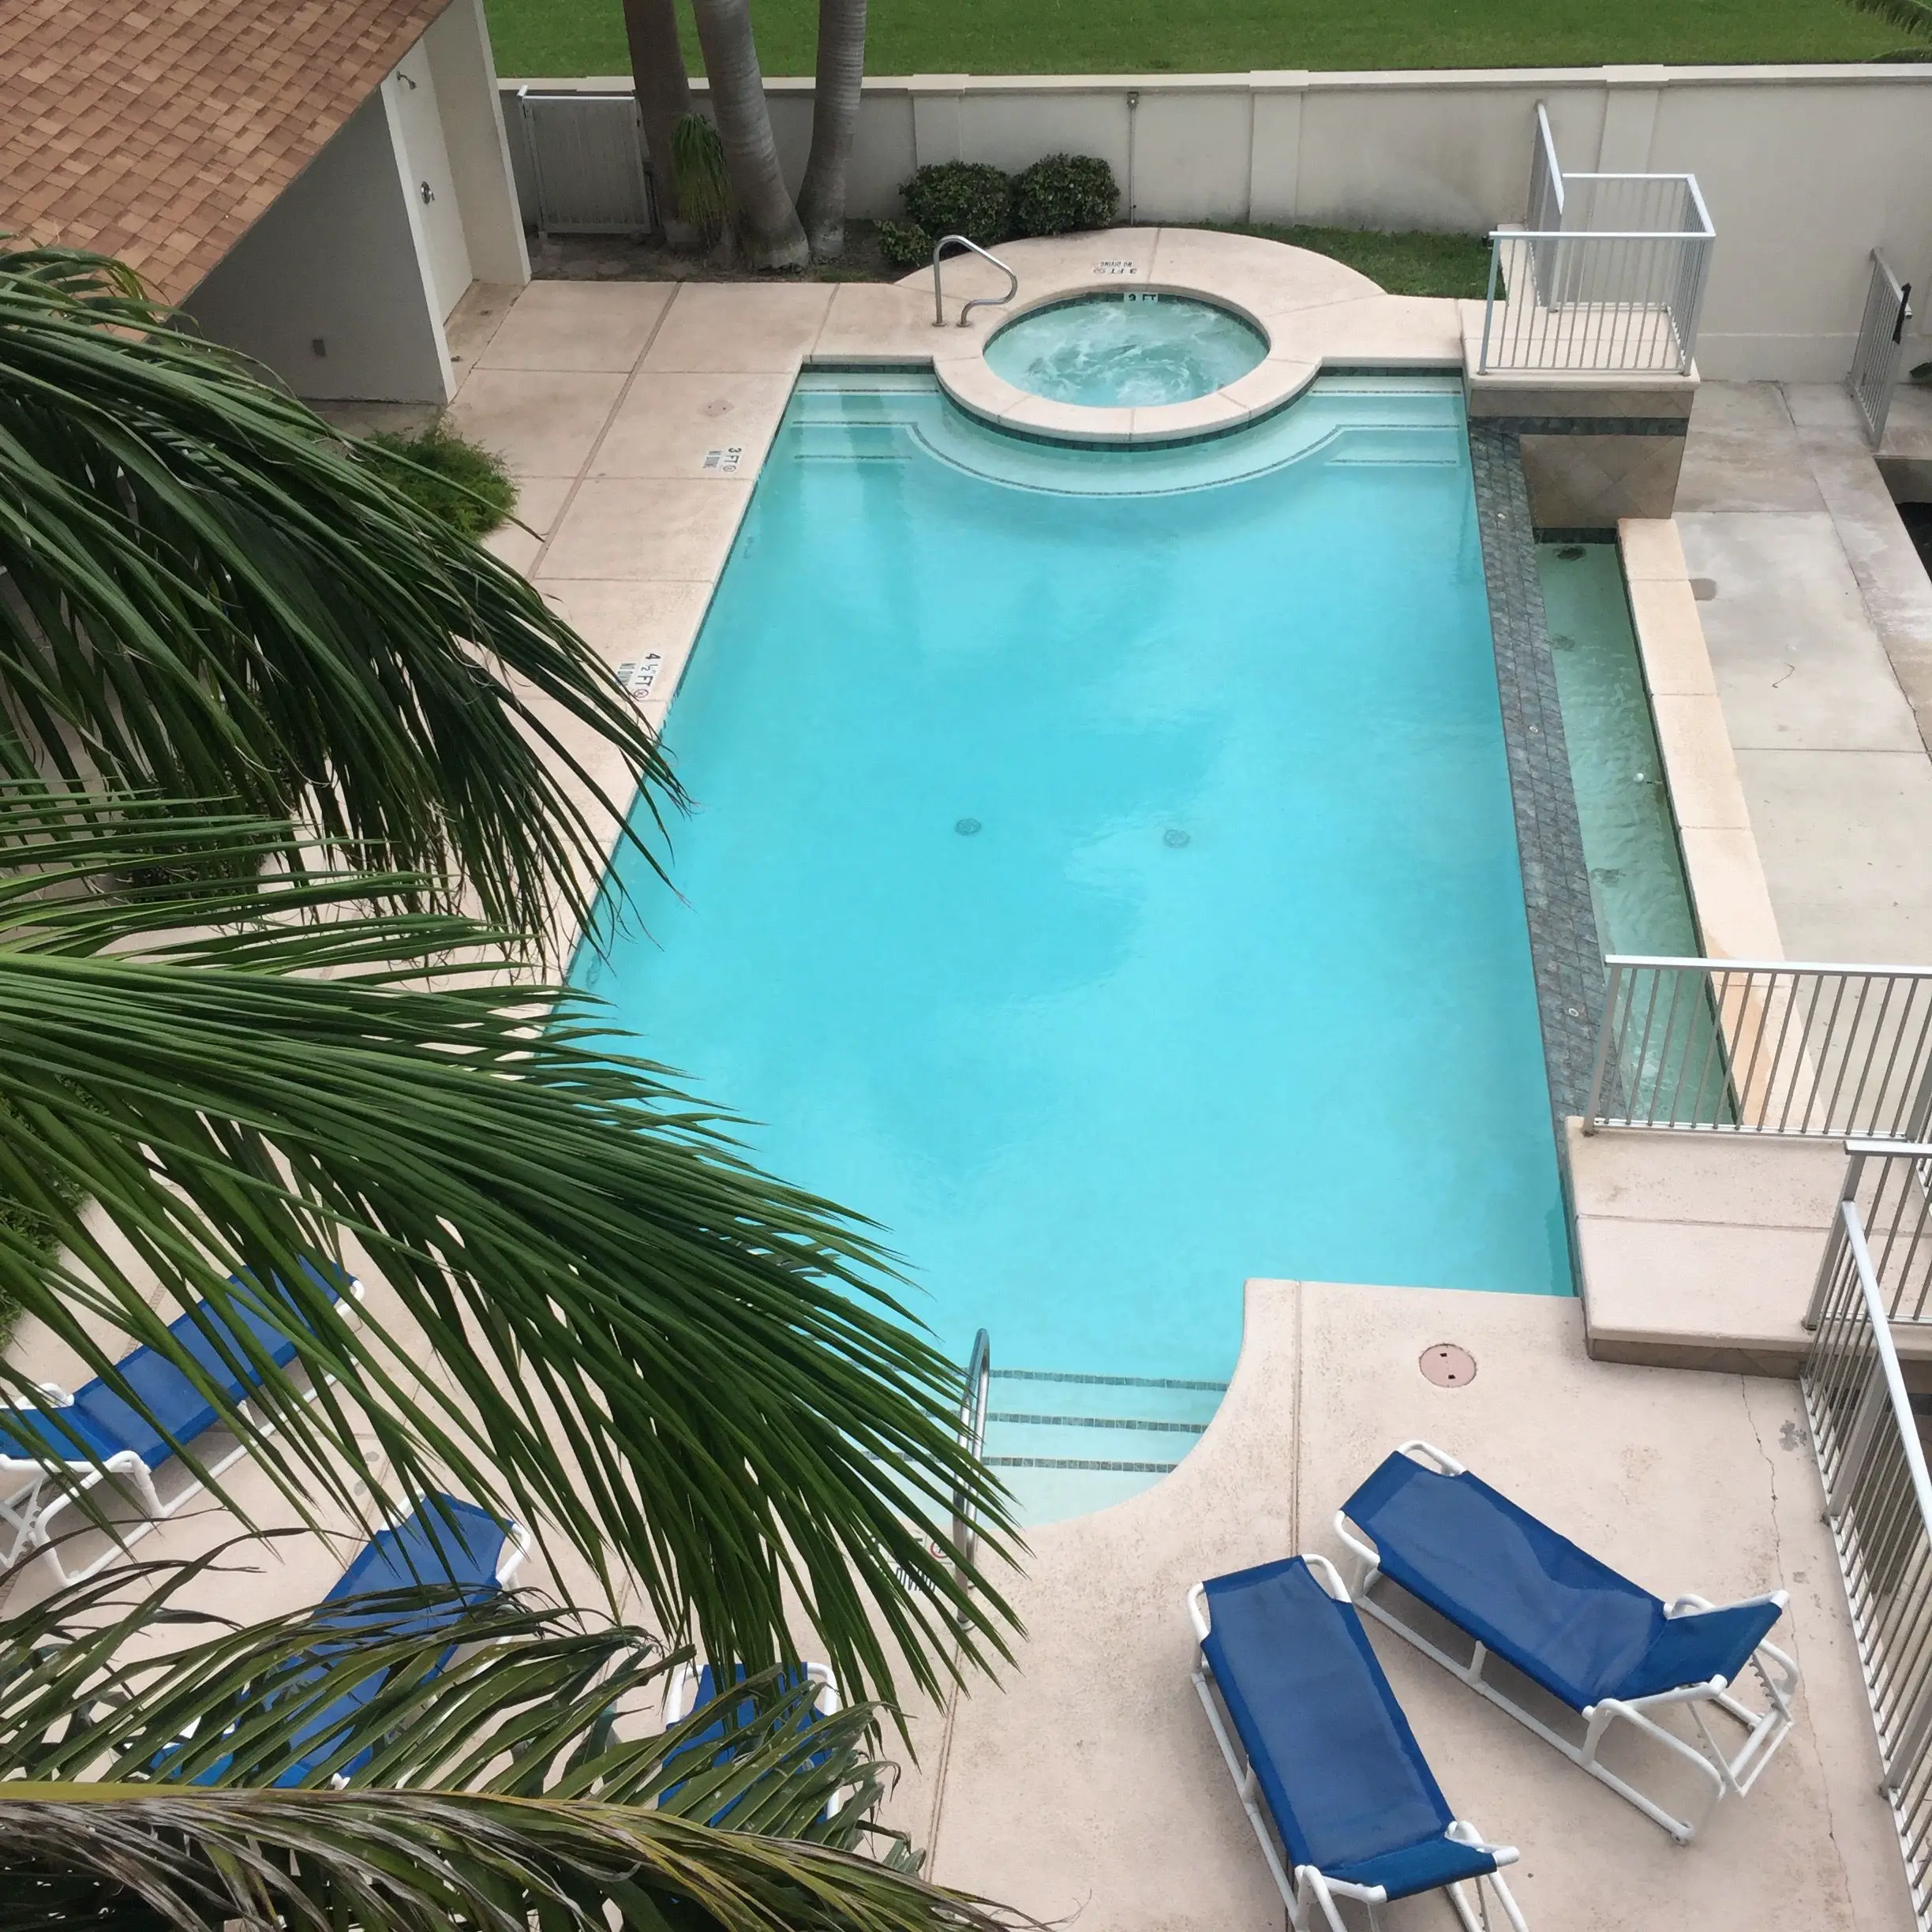 Las Marinas (301) Condonumium swimming pool is one of the most ...